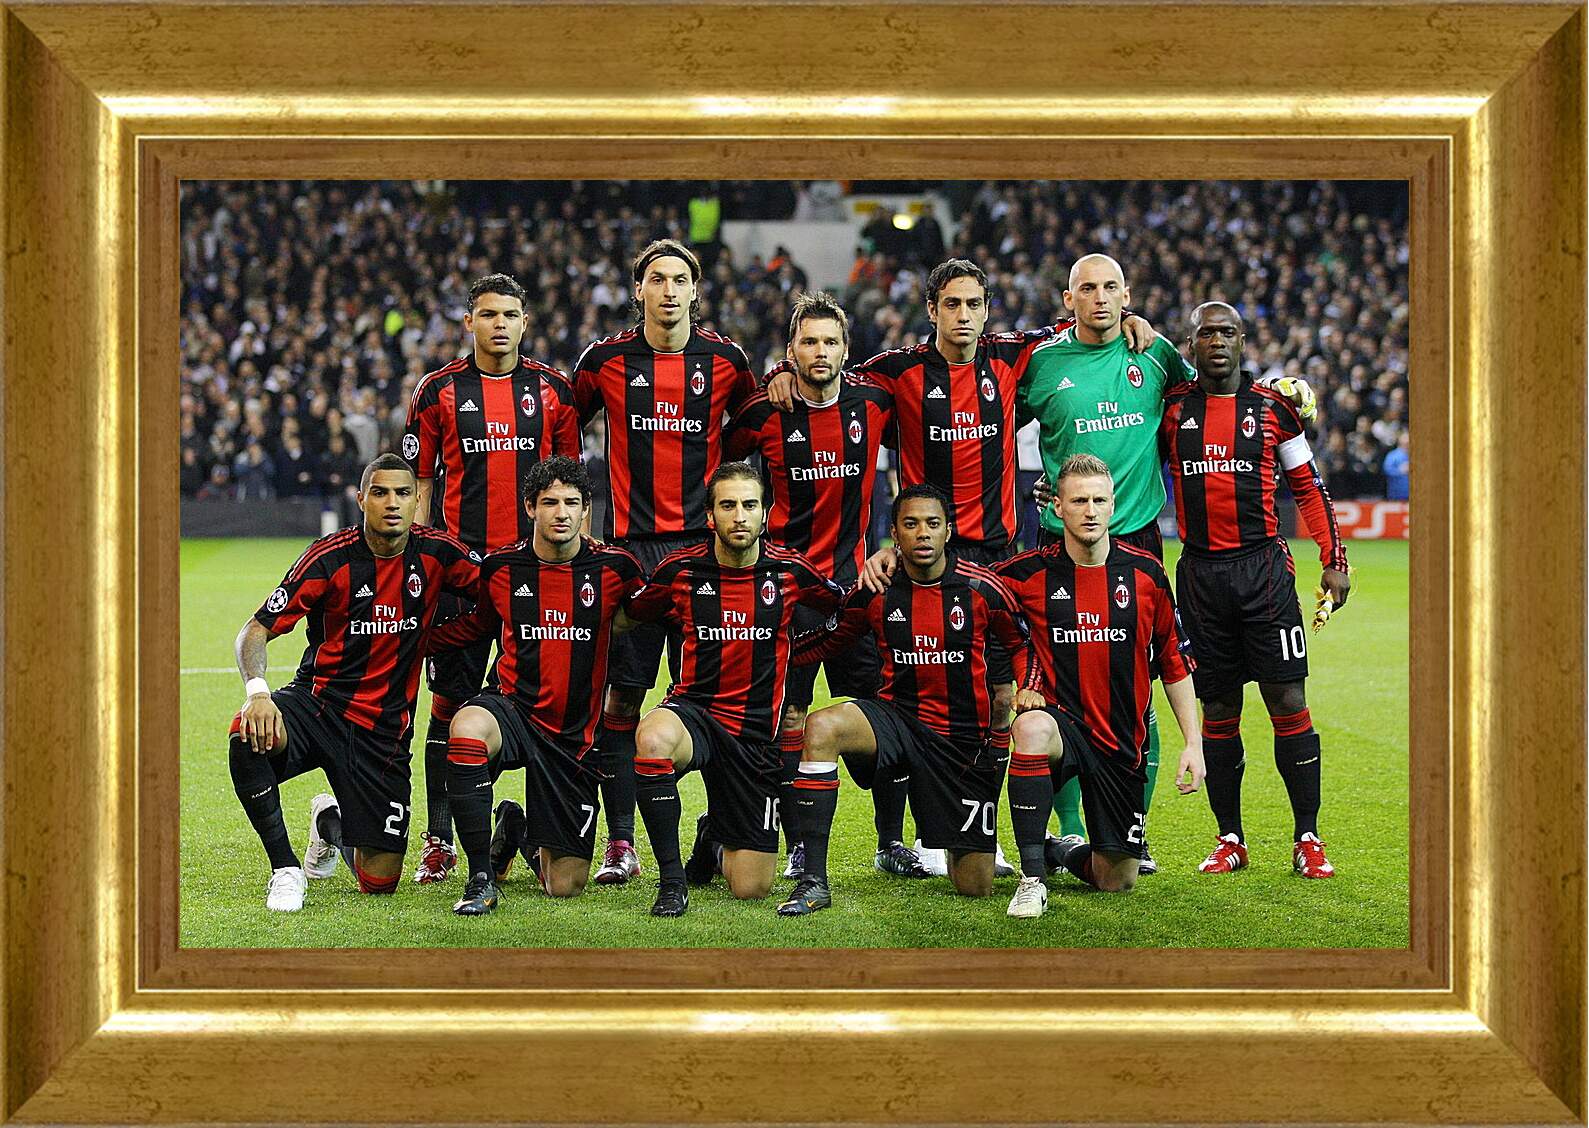 Картина в раме - Фото перед матчем ФК Милан